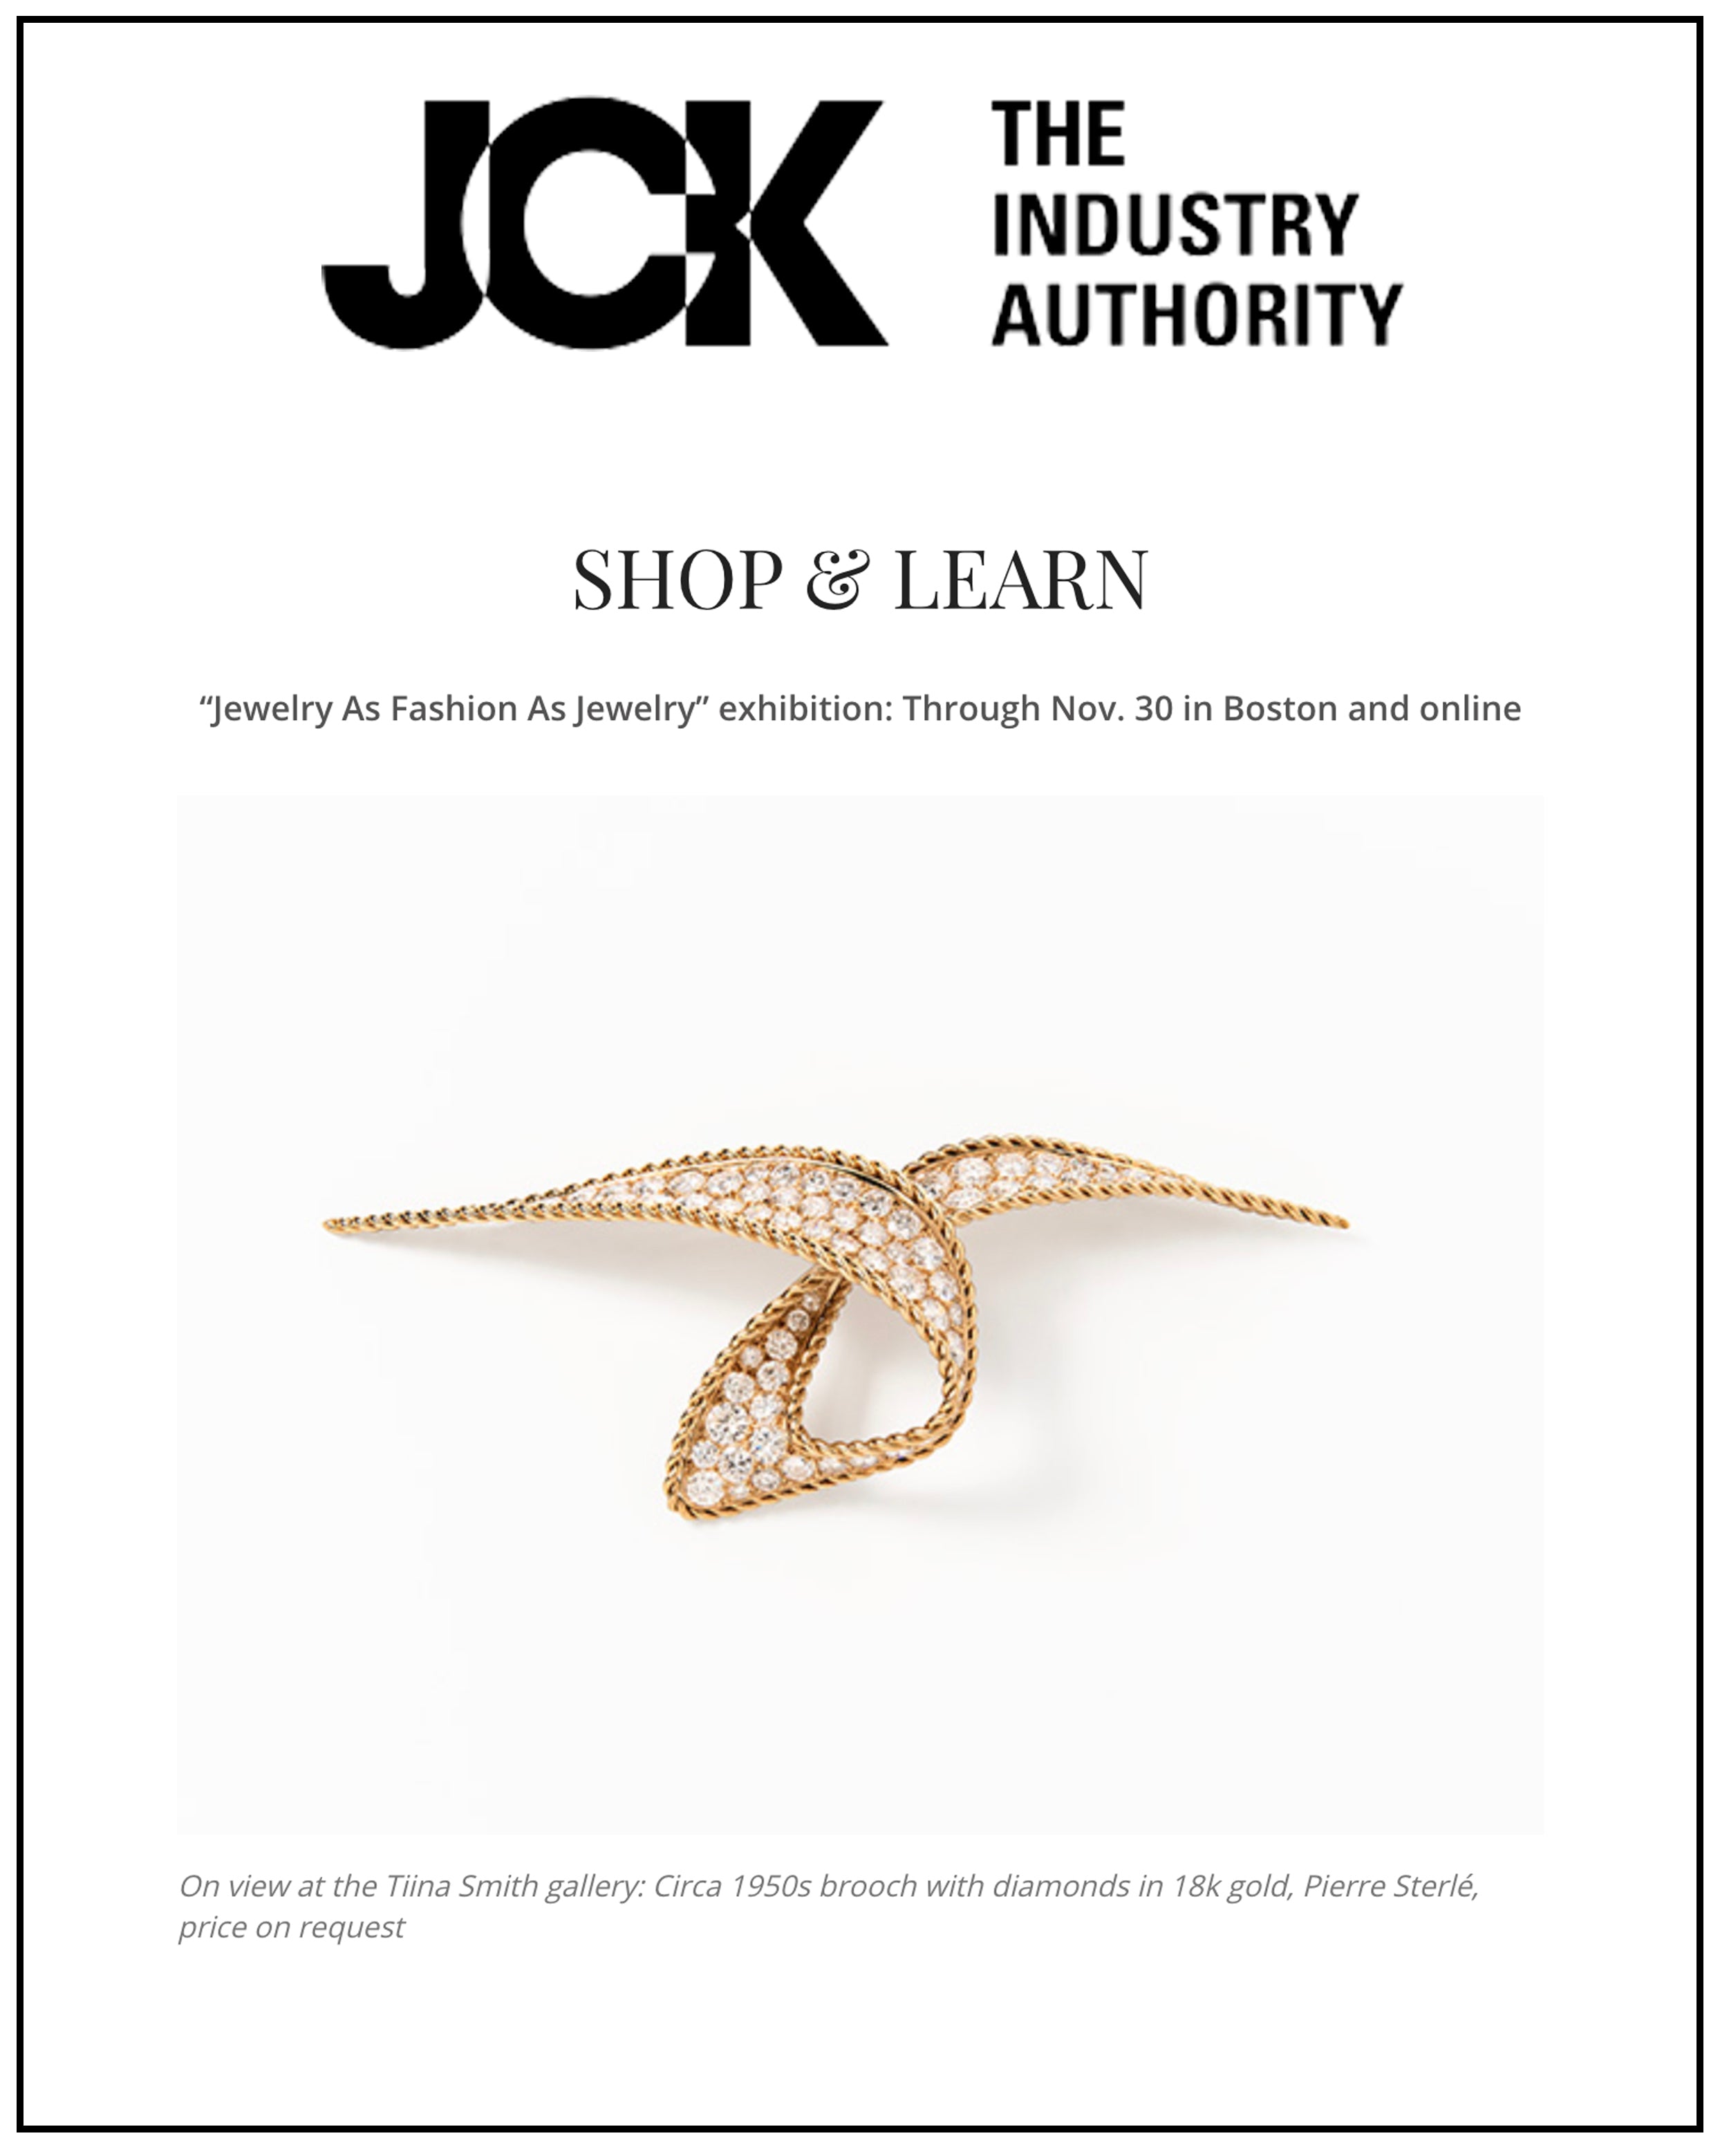 https://www.jckonline.com/editorial-article/jck-jewelry-agenda-week-of-oct-4/